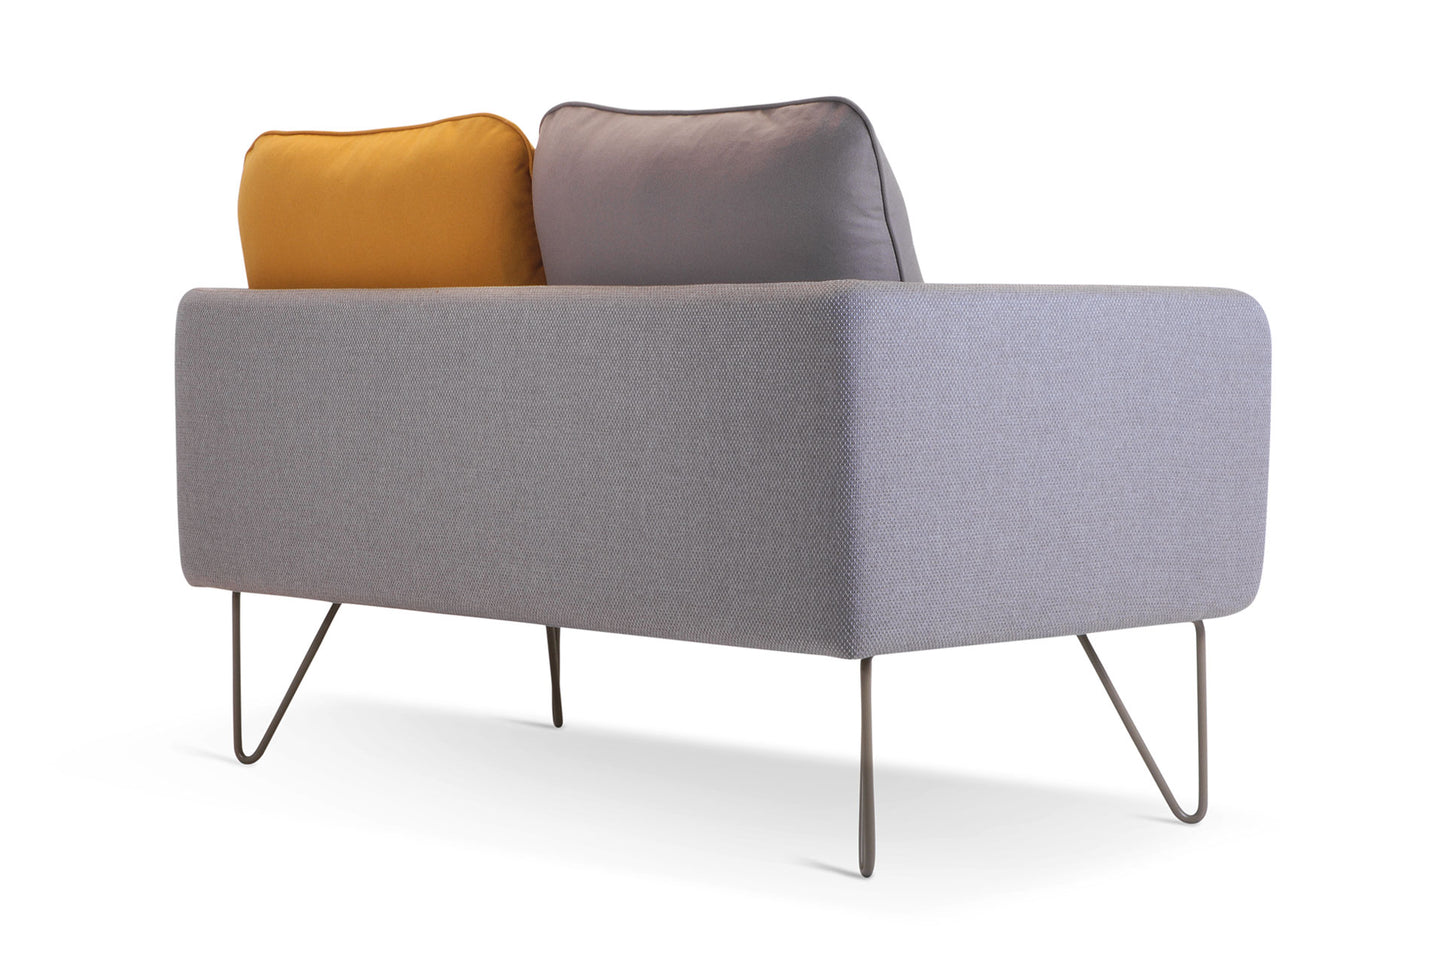 Duomo Upholstered Sofa by Adrenalina - Designer Setsu & Shinobu Ito